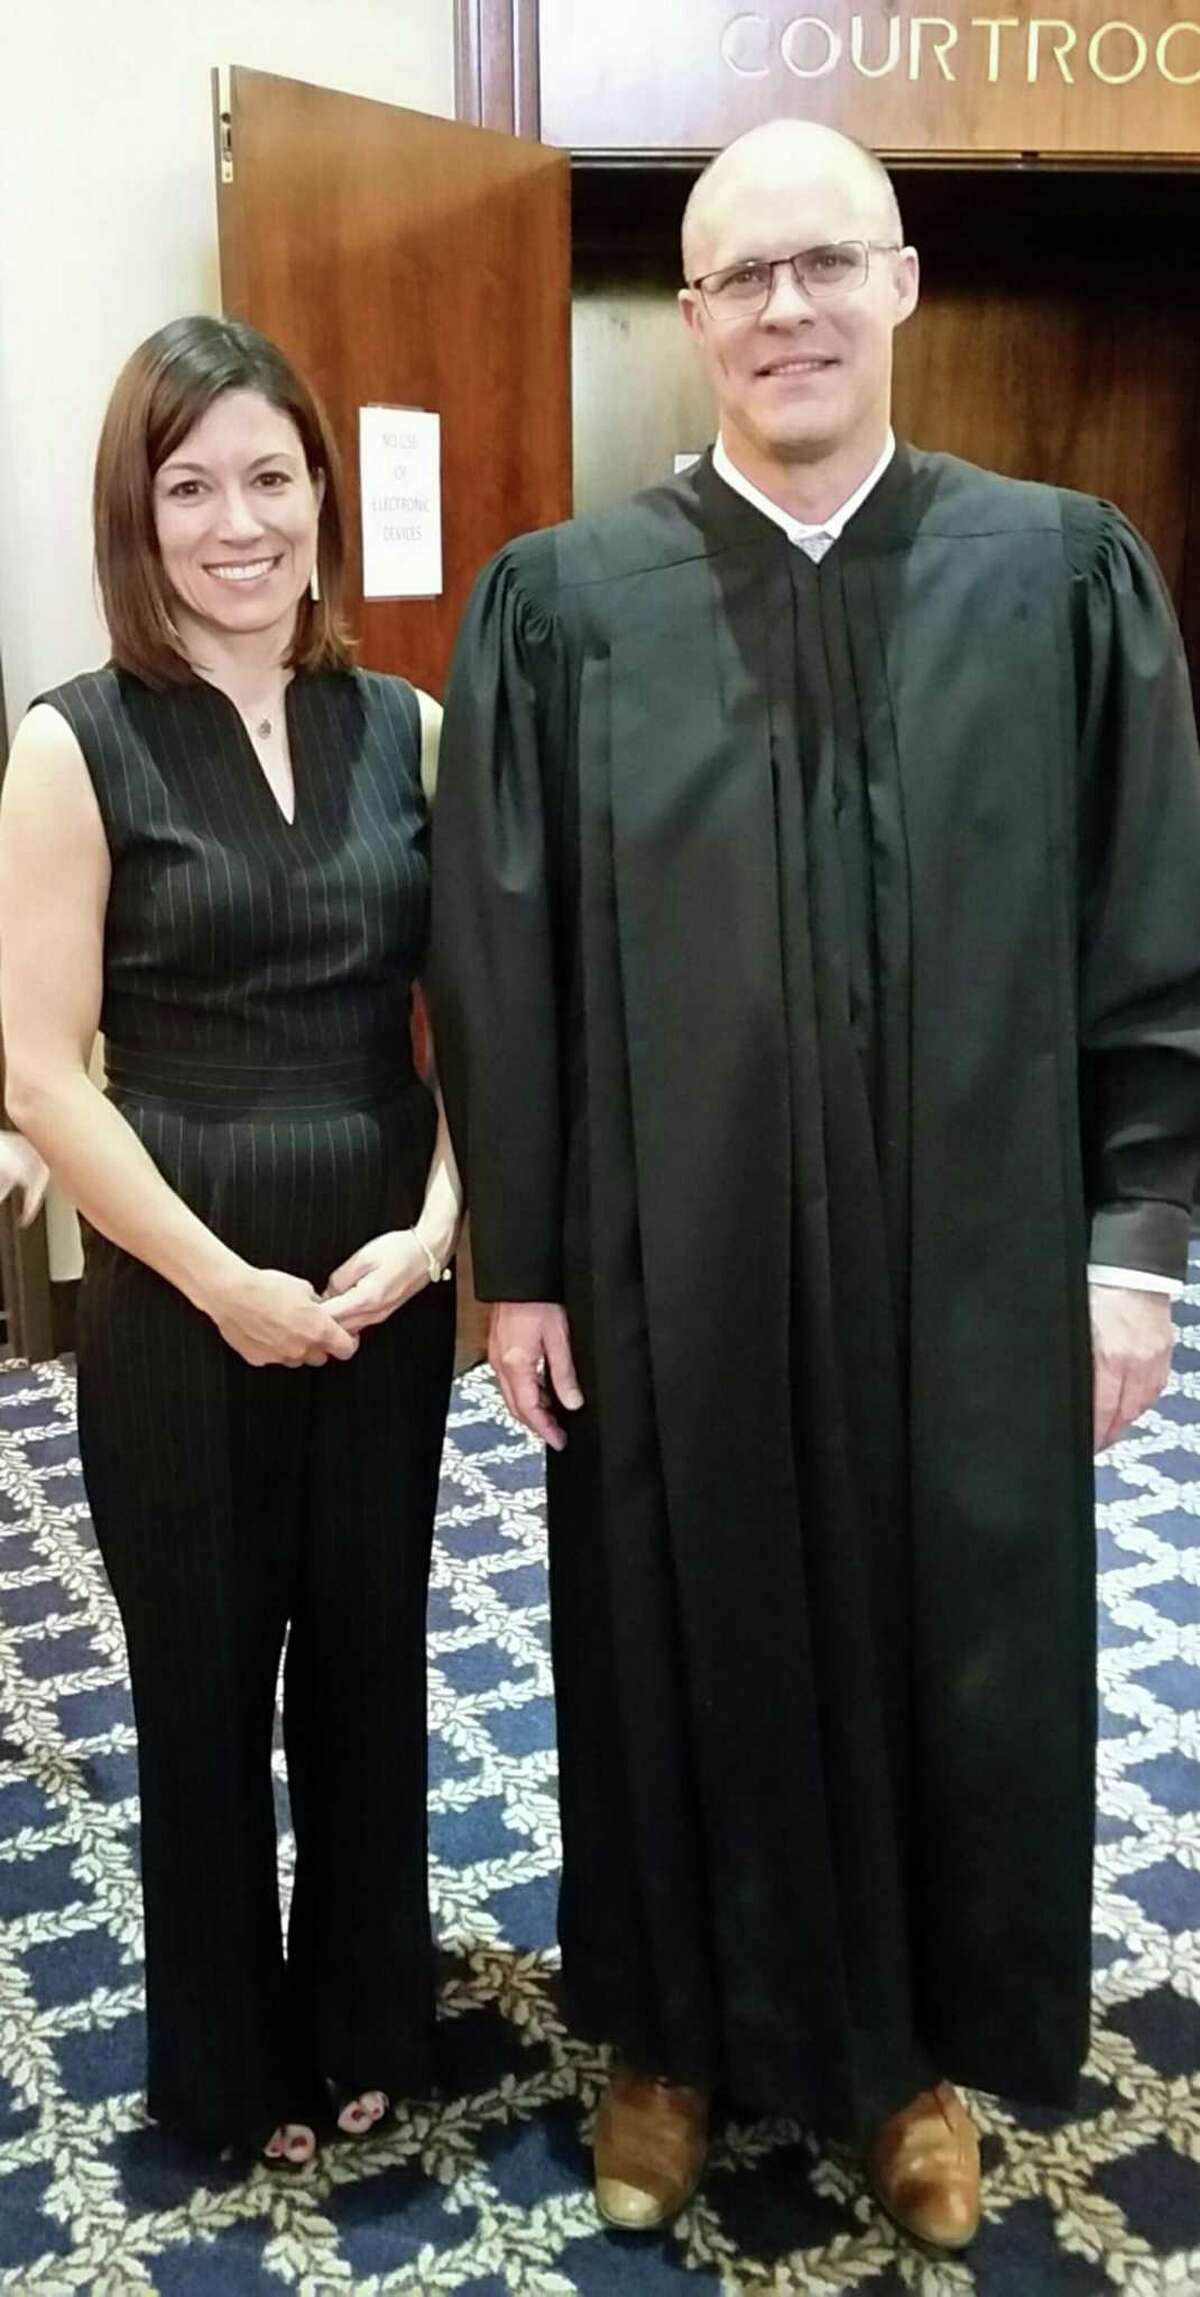 new magistrate judges, Richard B. Farrer and Elizabeth "Betsy" Chestney